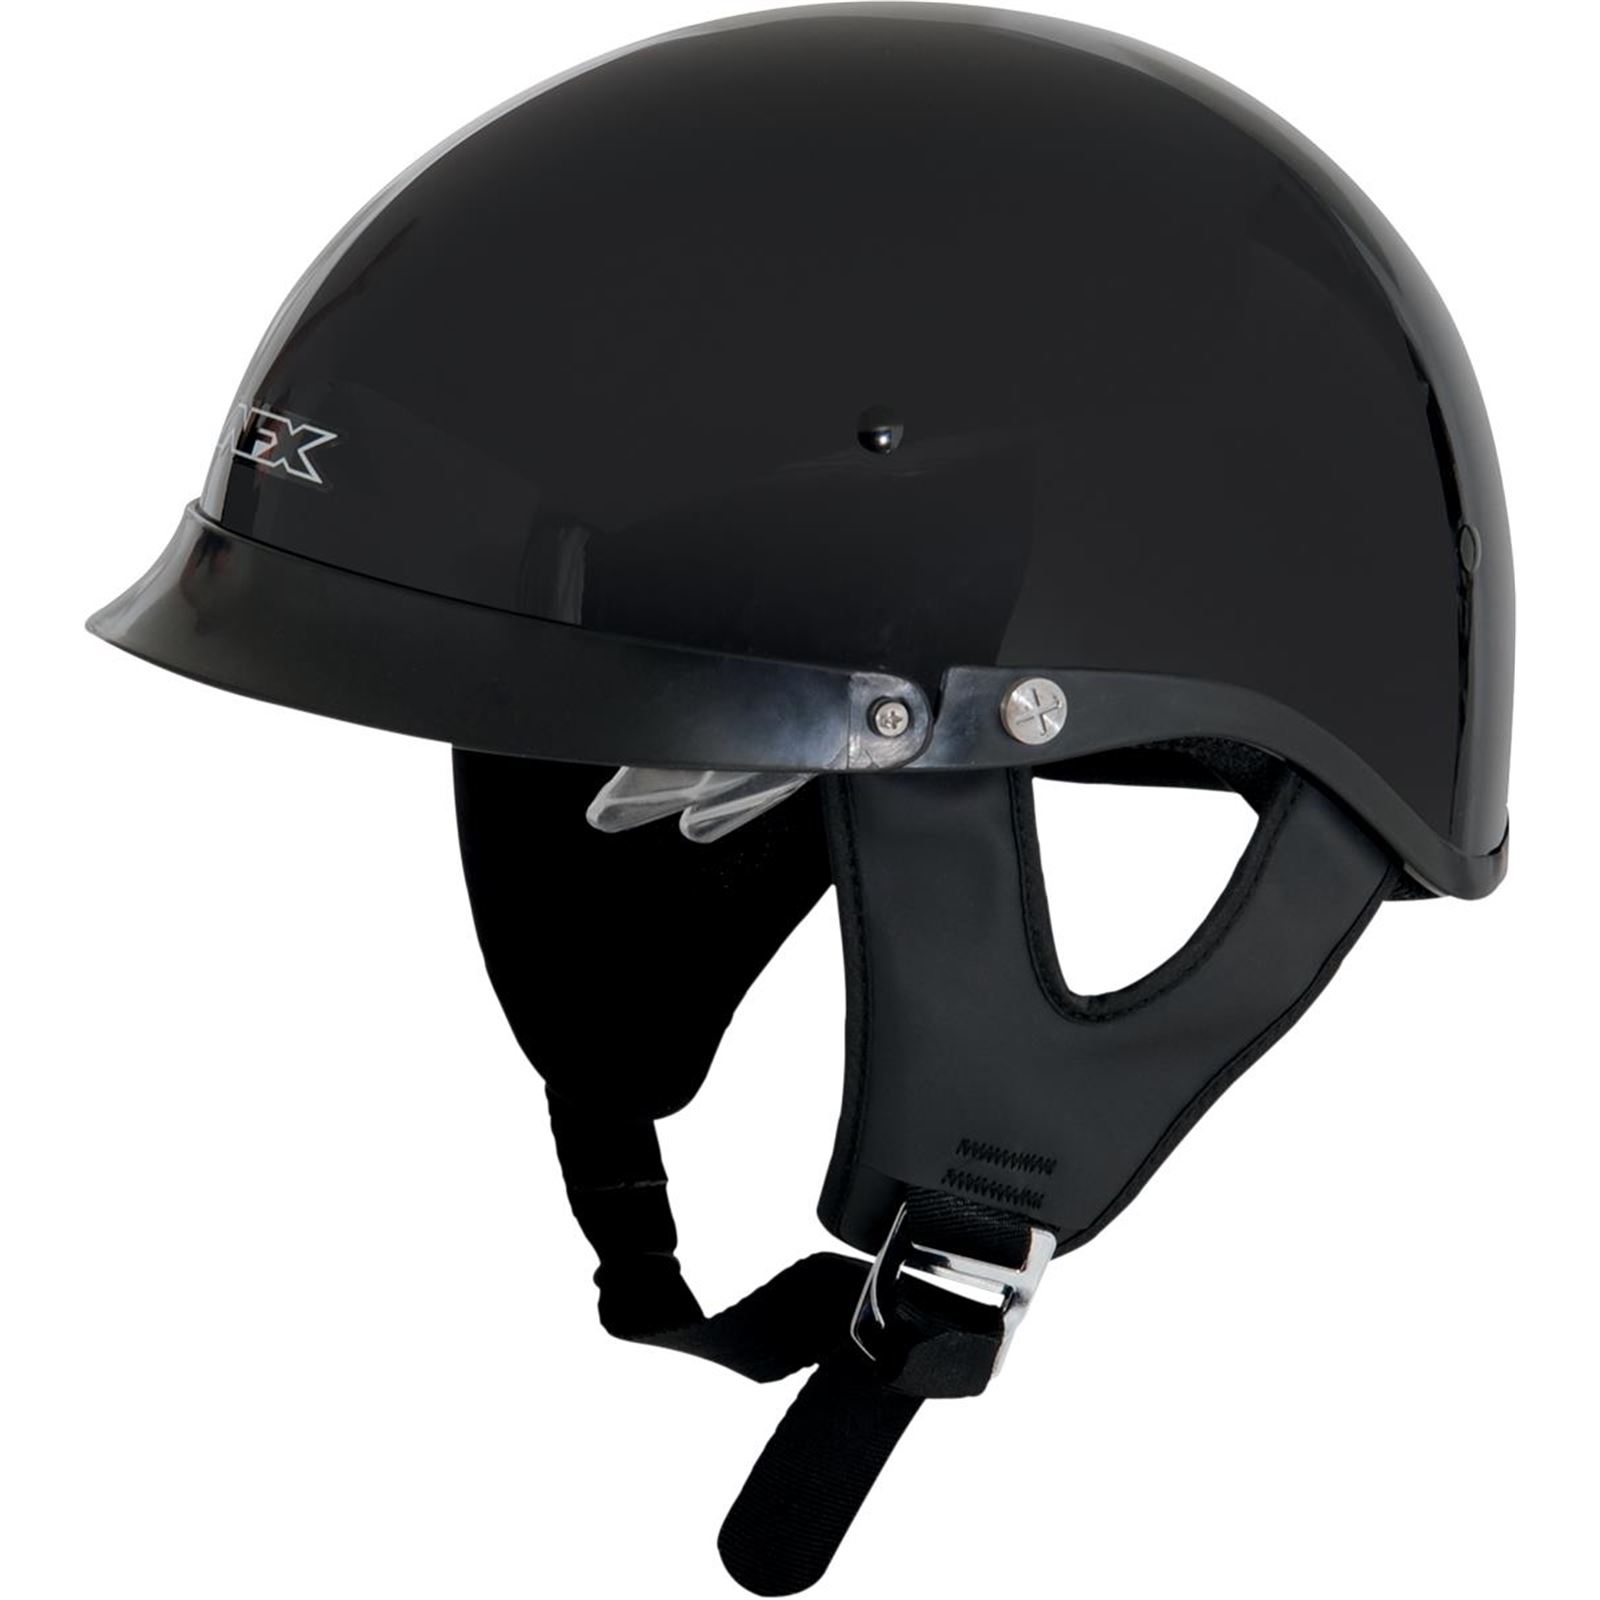 AFX FX-200 Helmet - Black - Small